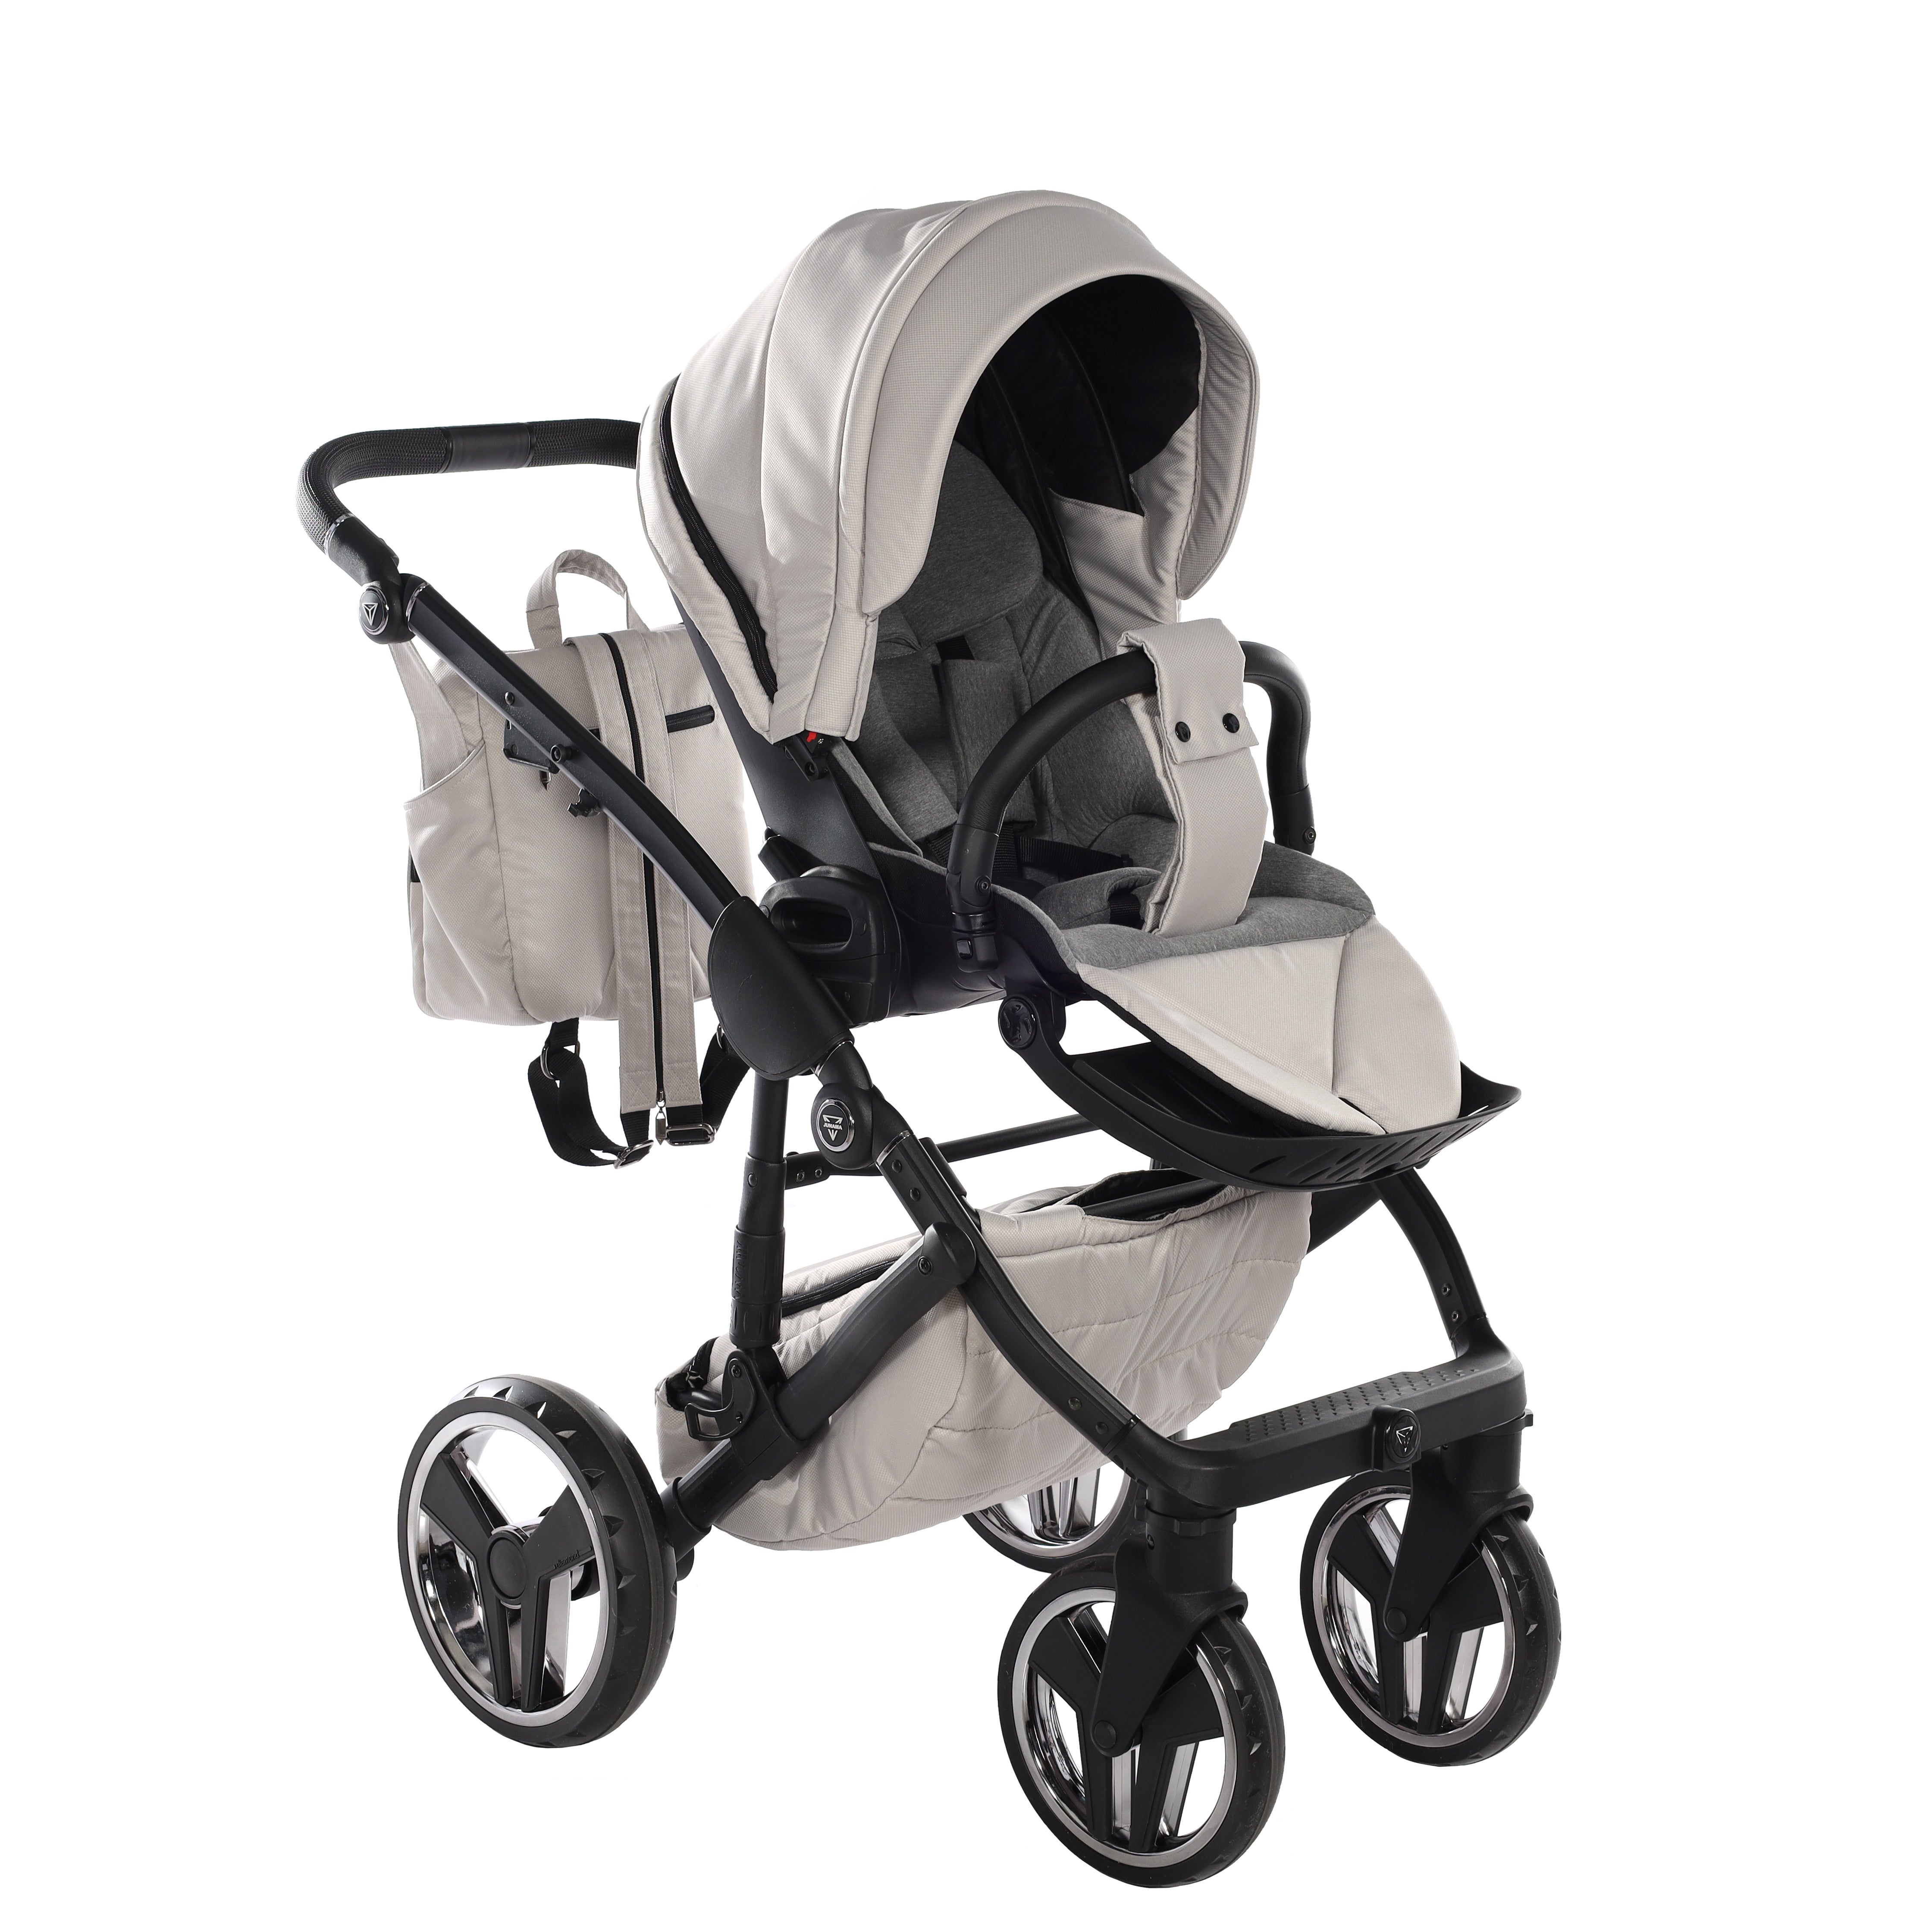 Junama BASIC, baby stroller and bassinet 2 in 1 - LIGHT BEIGE, Code number: JUNBSC05